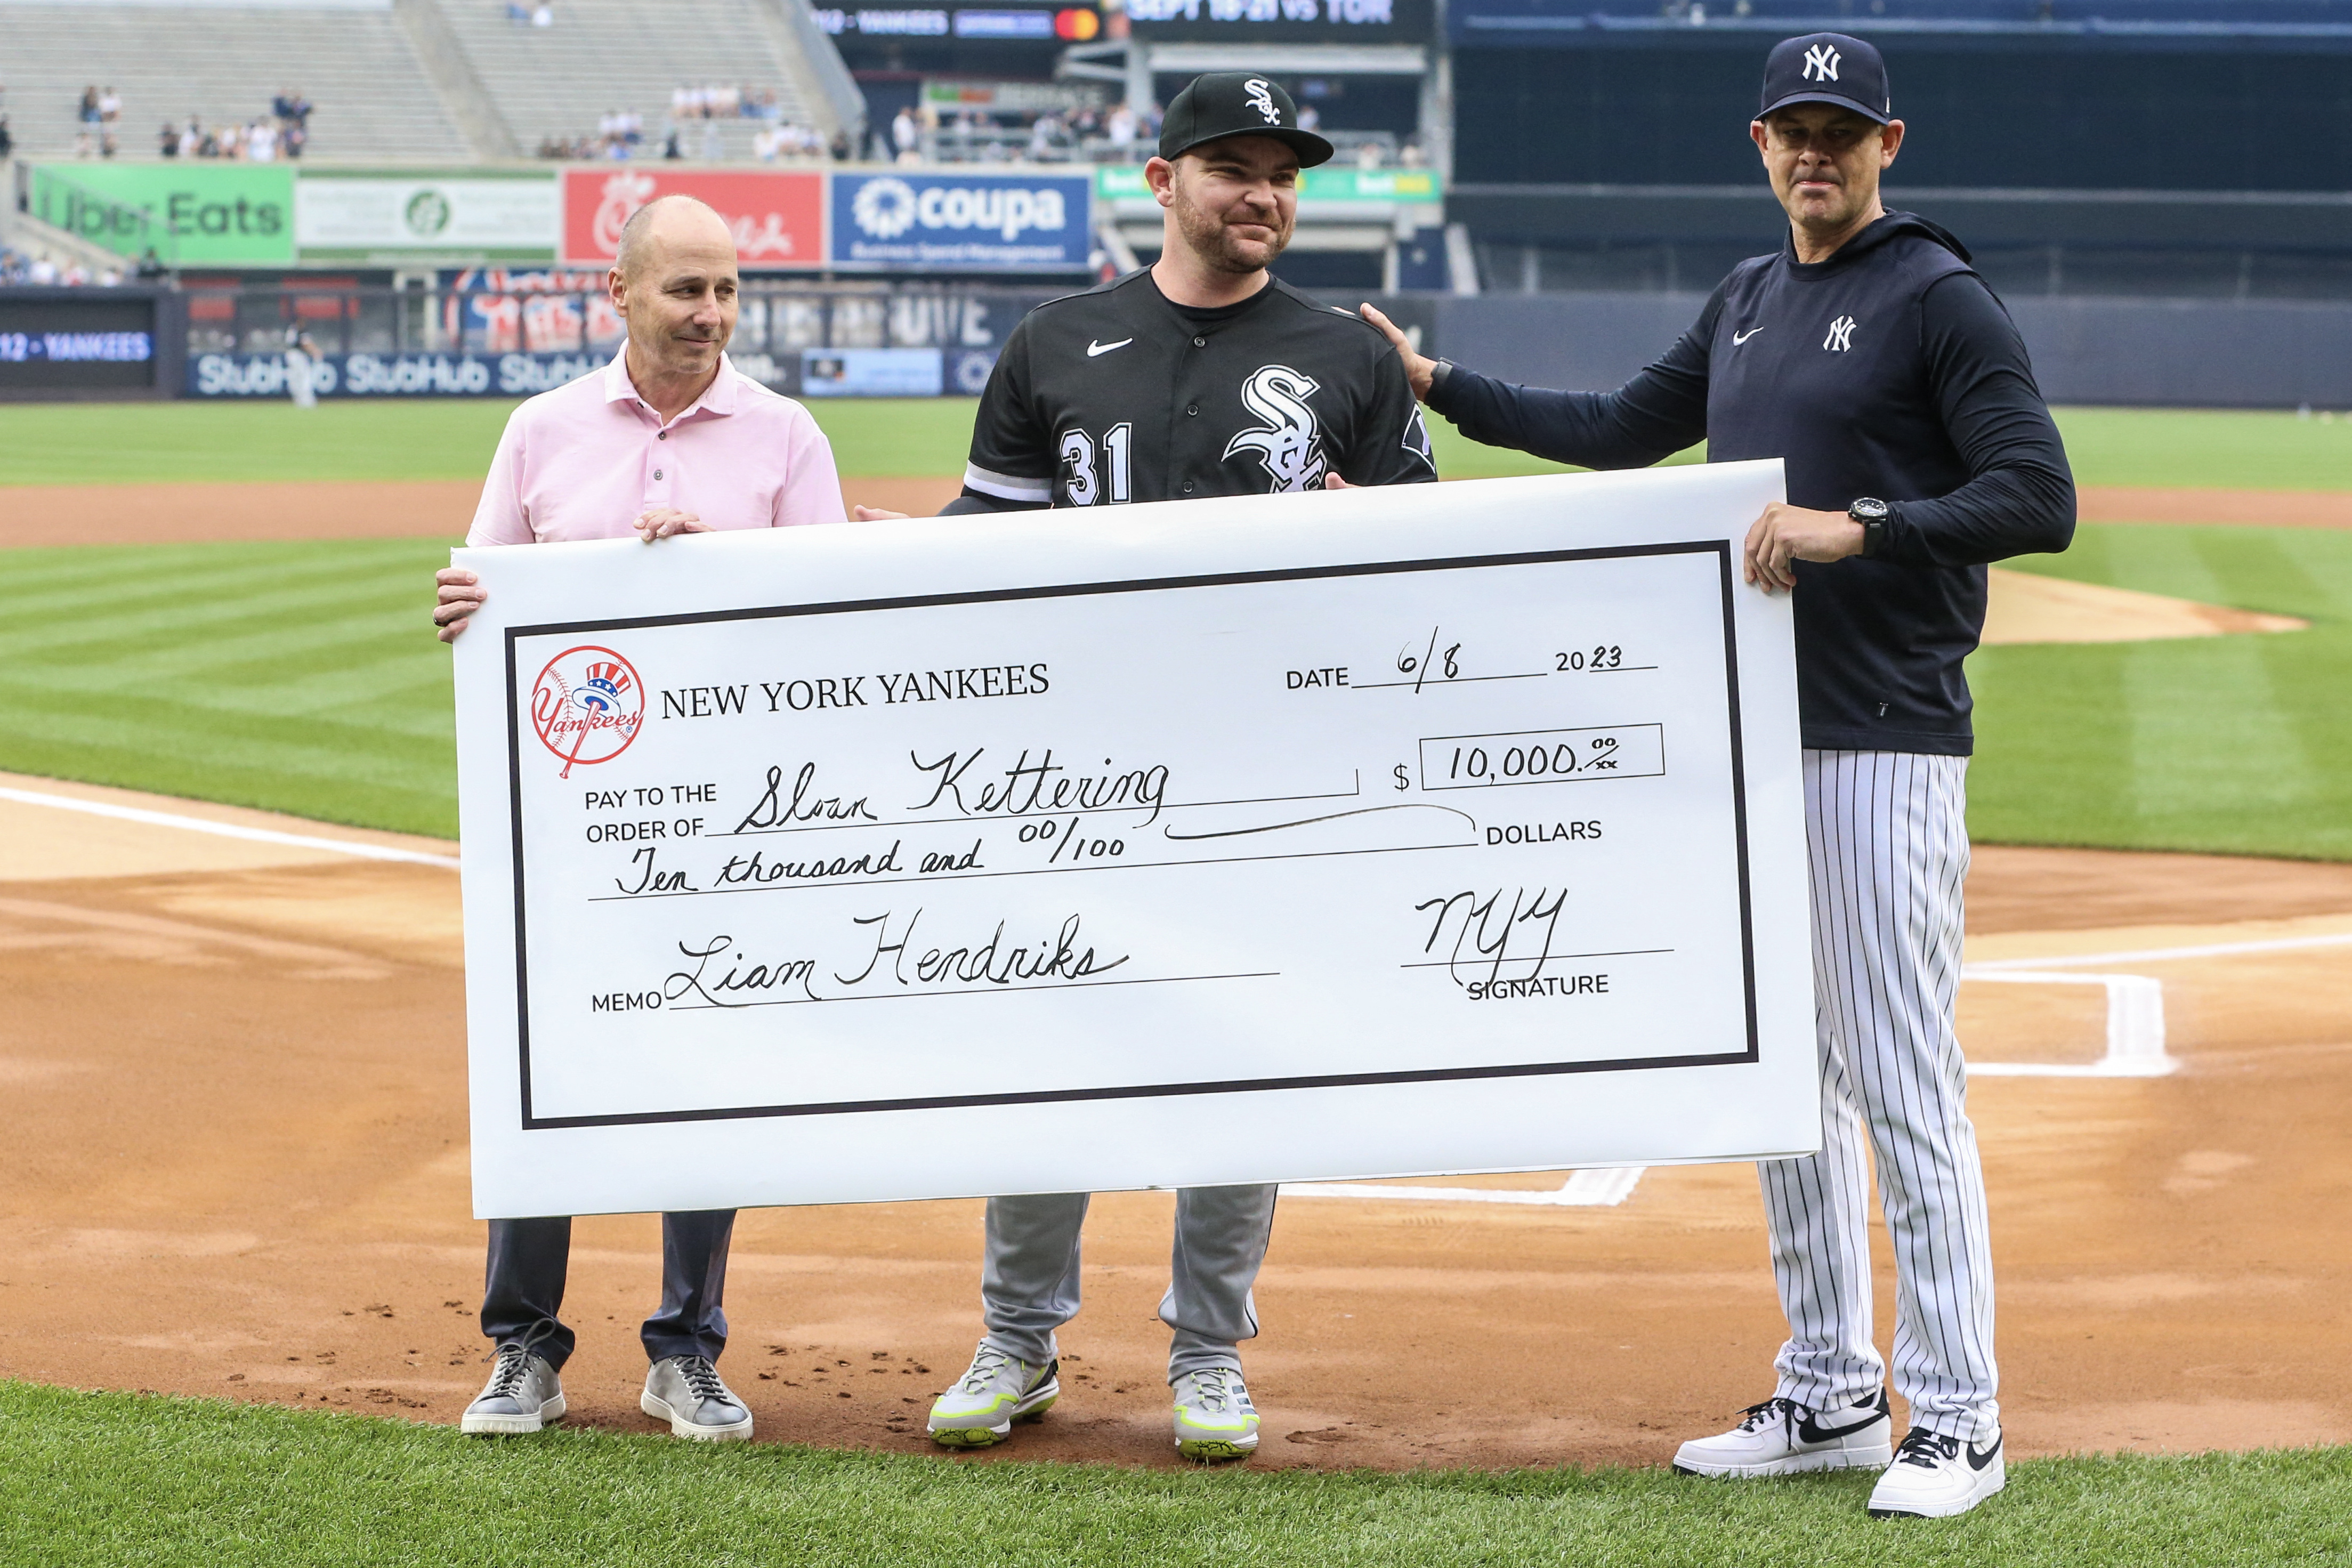 Yankees activ yankees mlb jersey brand history ate Luis Severino